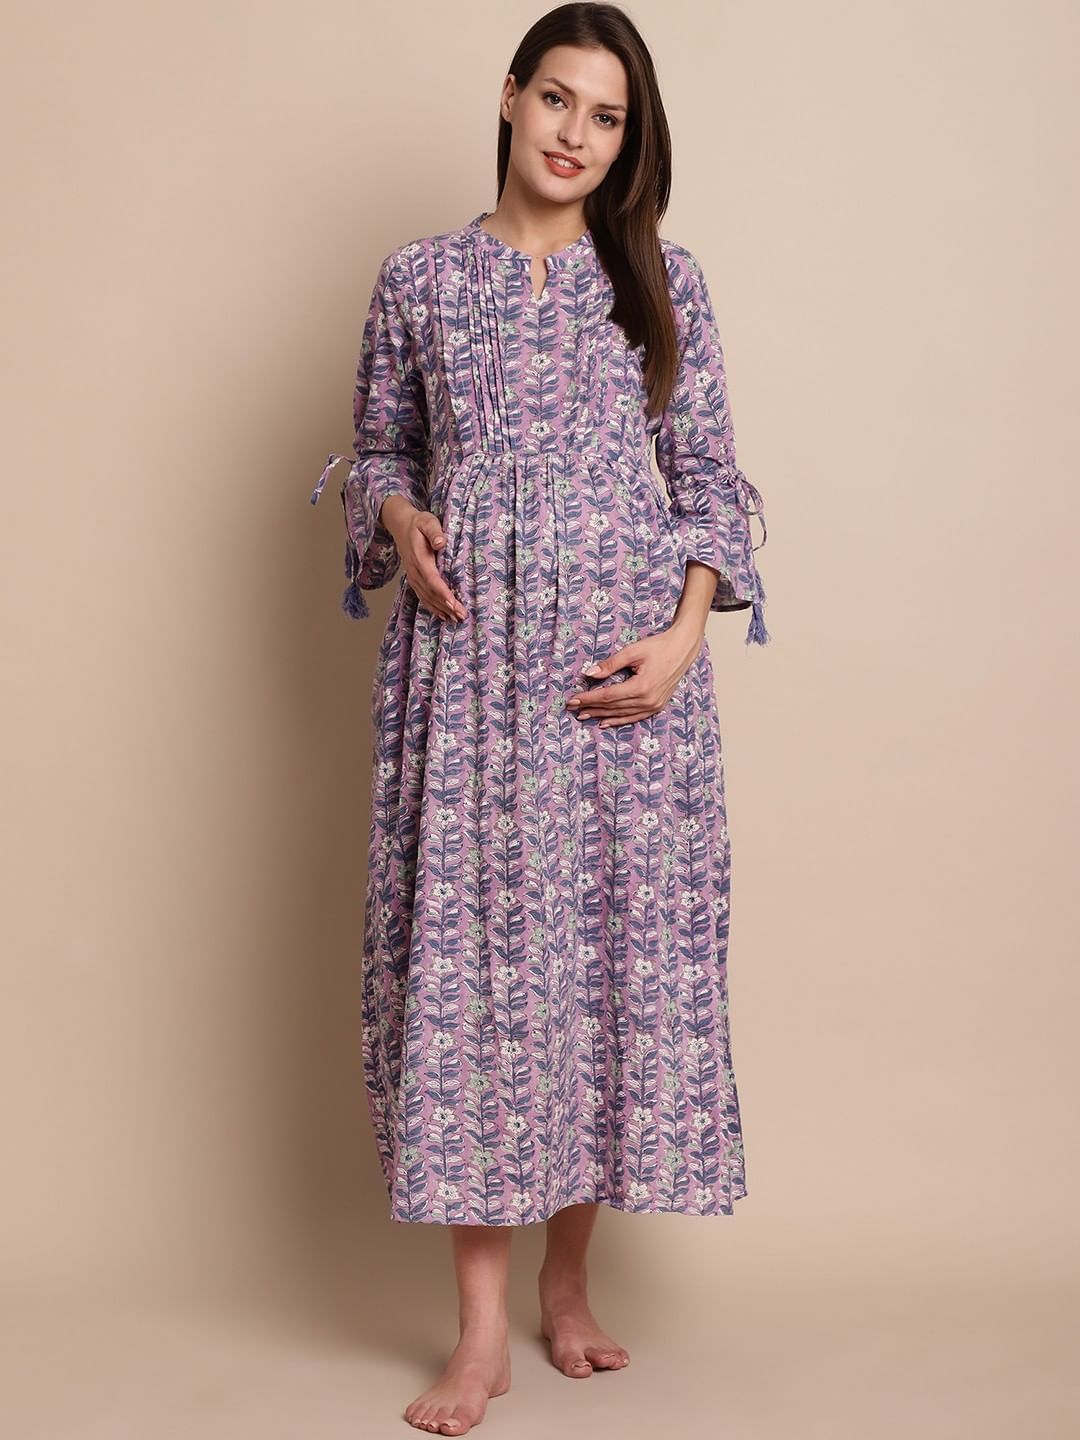 Purple Floral Block Print Maternity Dress